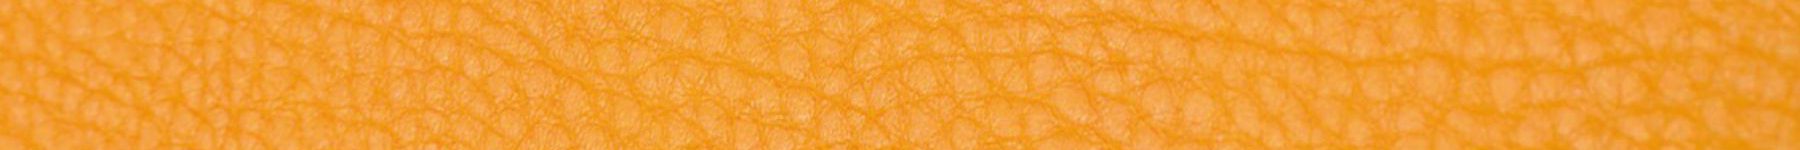 SWOOFLE Möbel - orange - schwer entflammbar - B1 - DIN 4102